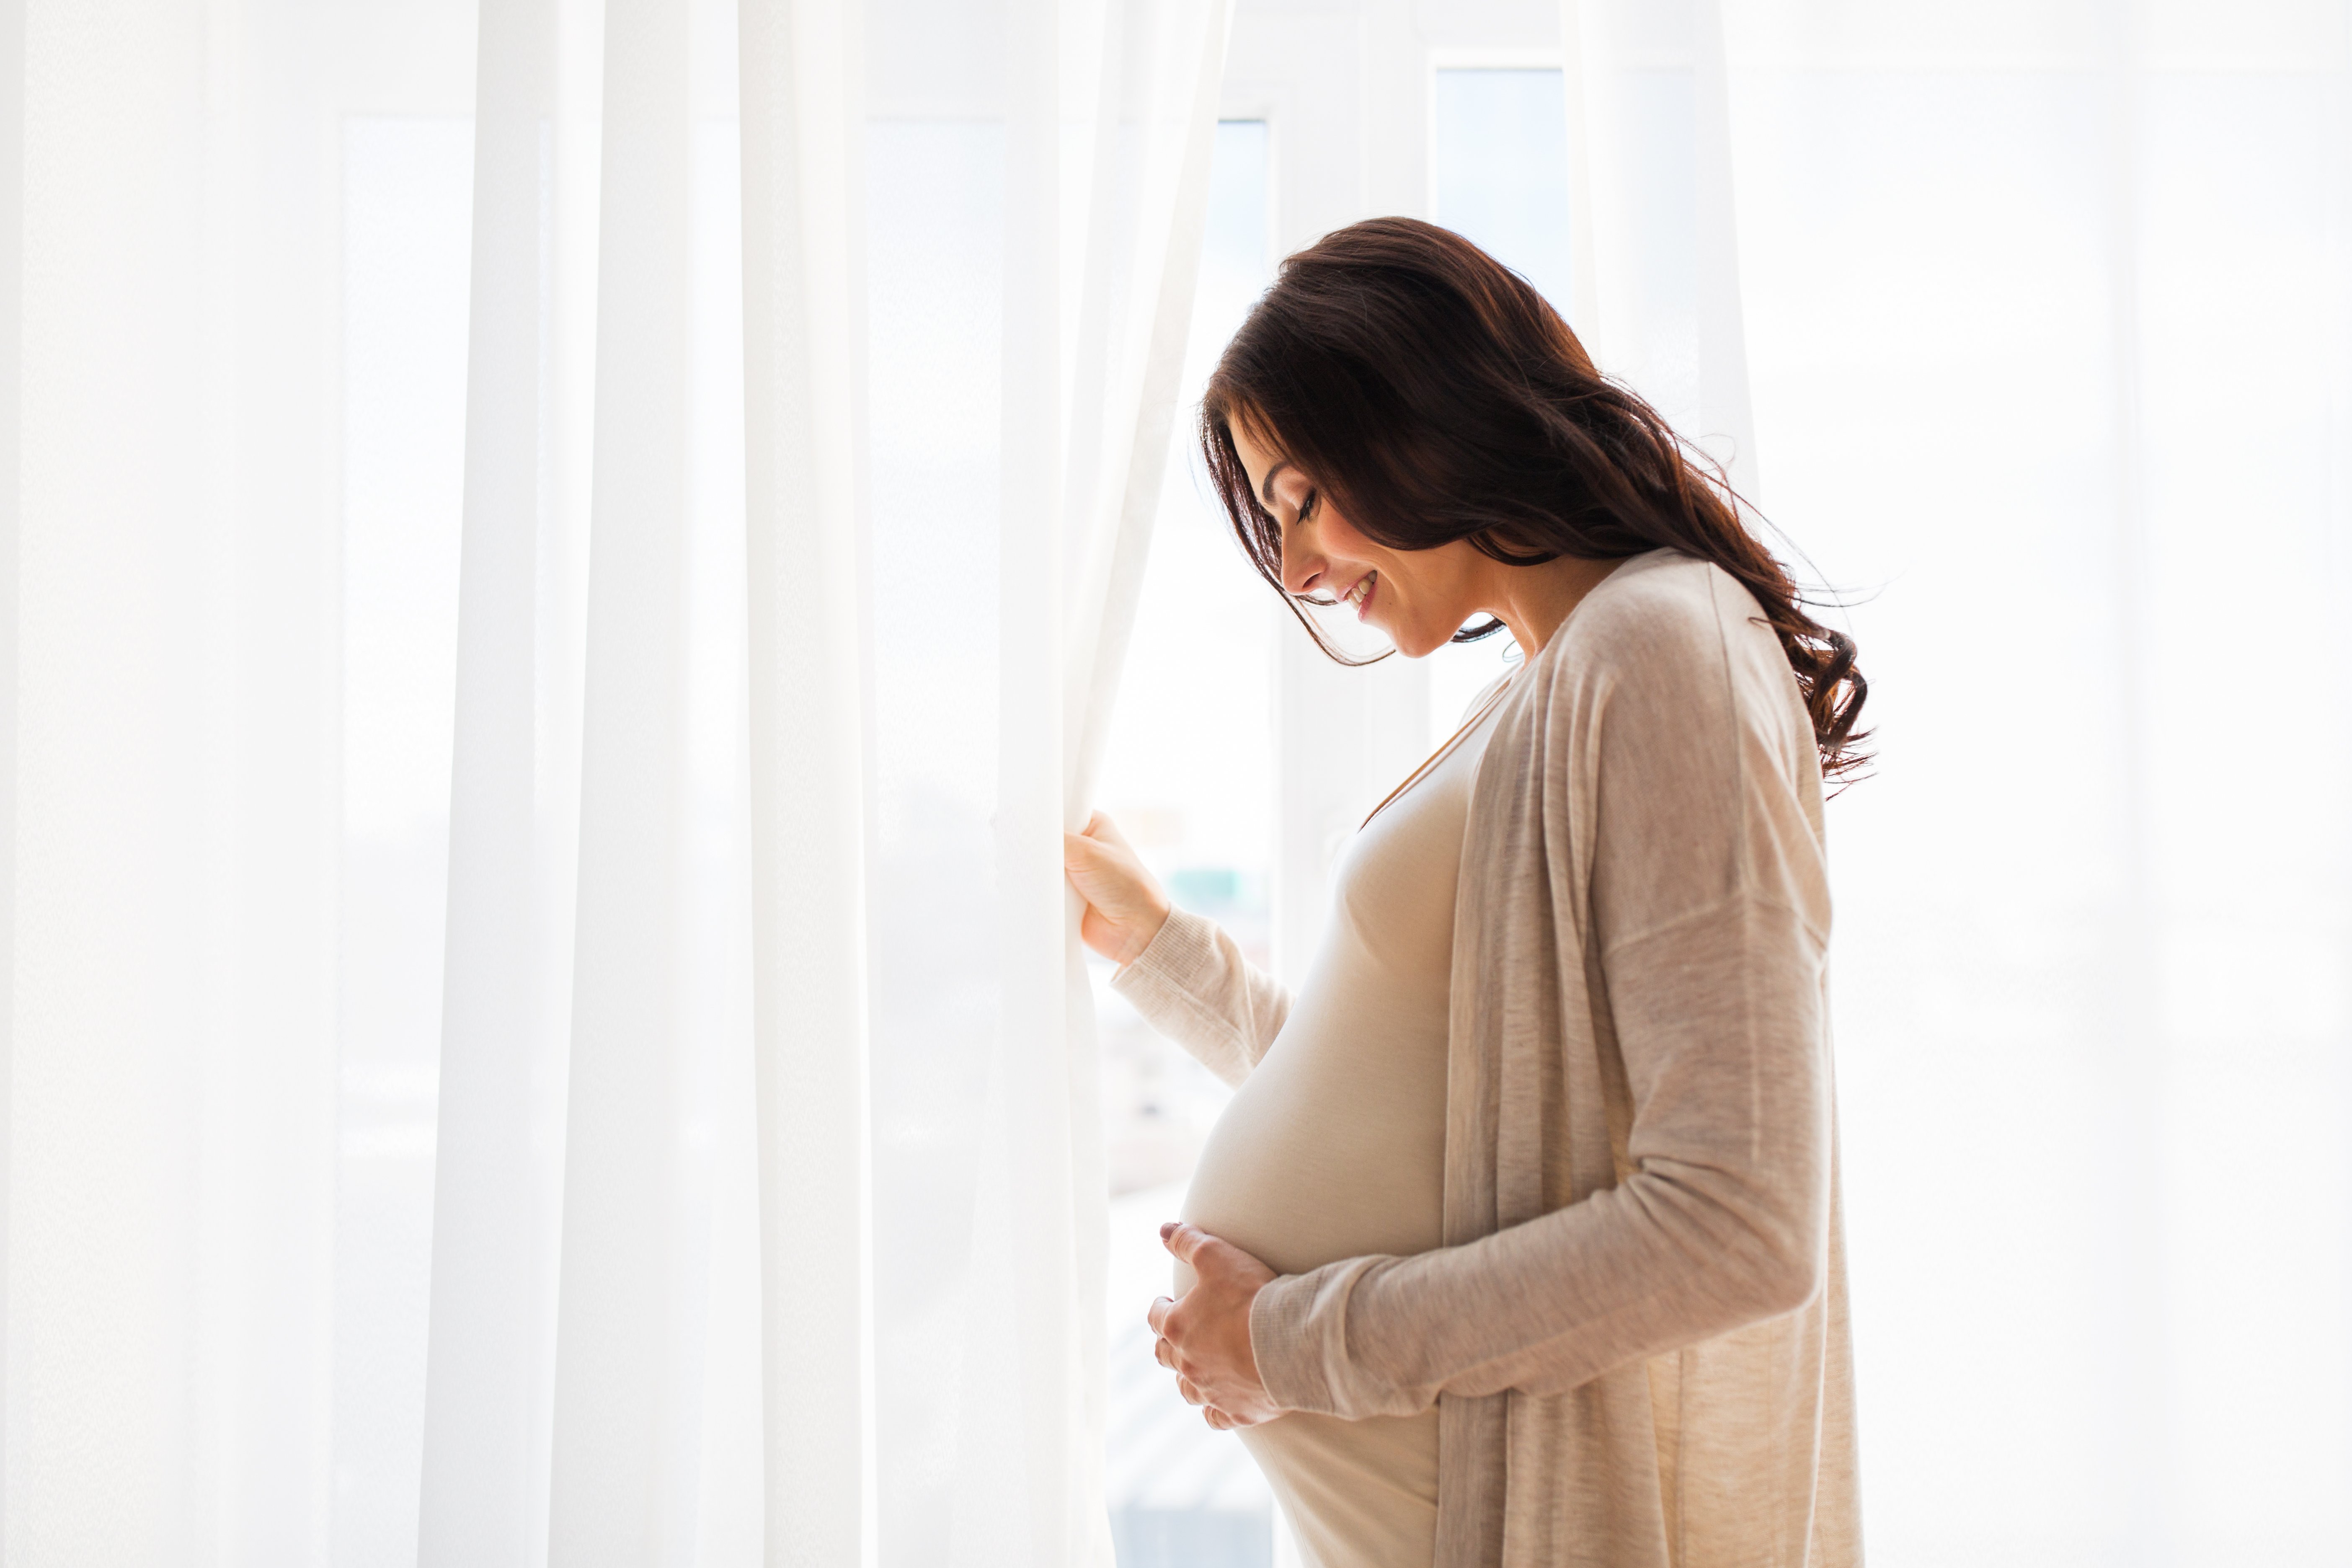 Mujer embarazada cerca de ventana | Fuente: Shutterstock